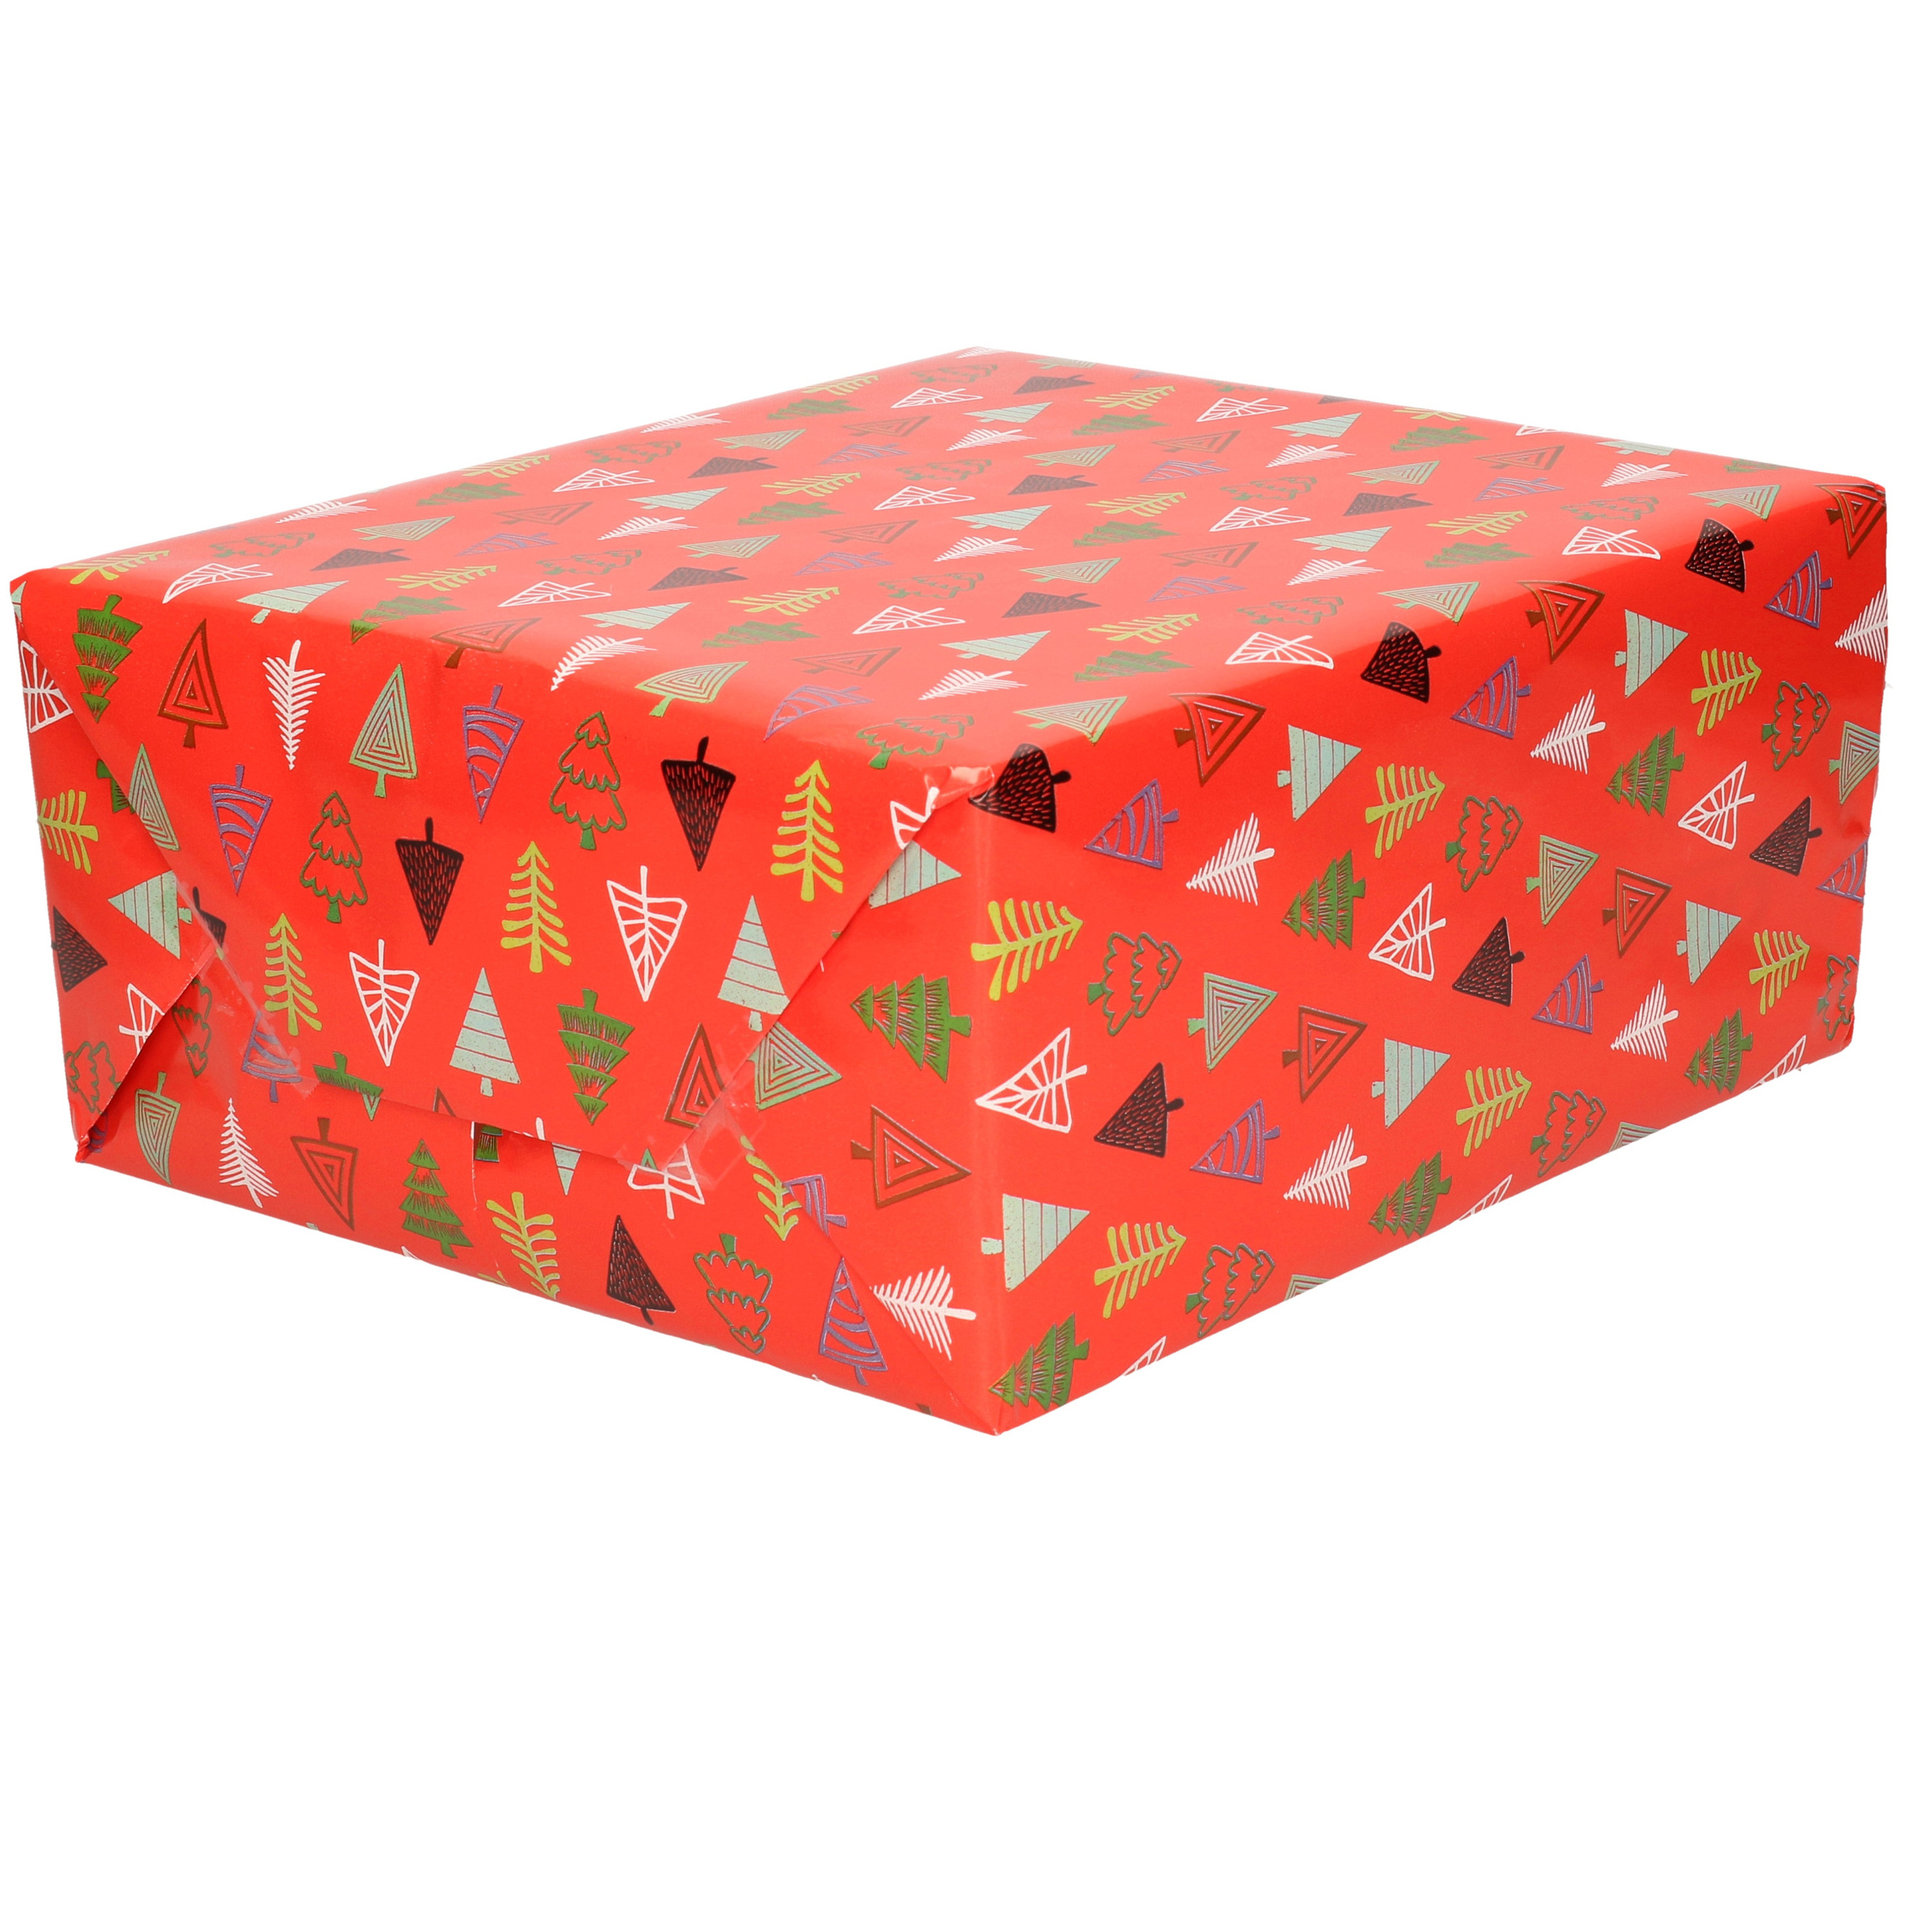 2x Rollen Kerst inpakpapier/cadeaupapier rood 2,5 x 0,7 meter